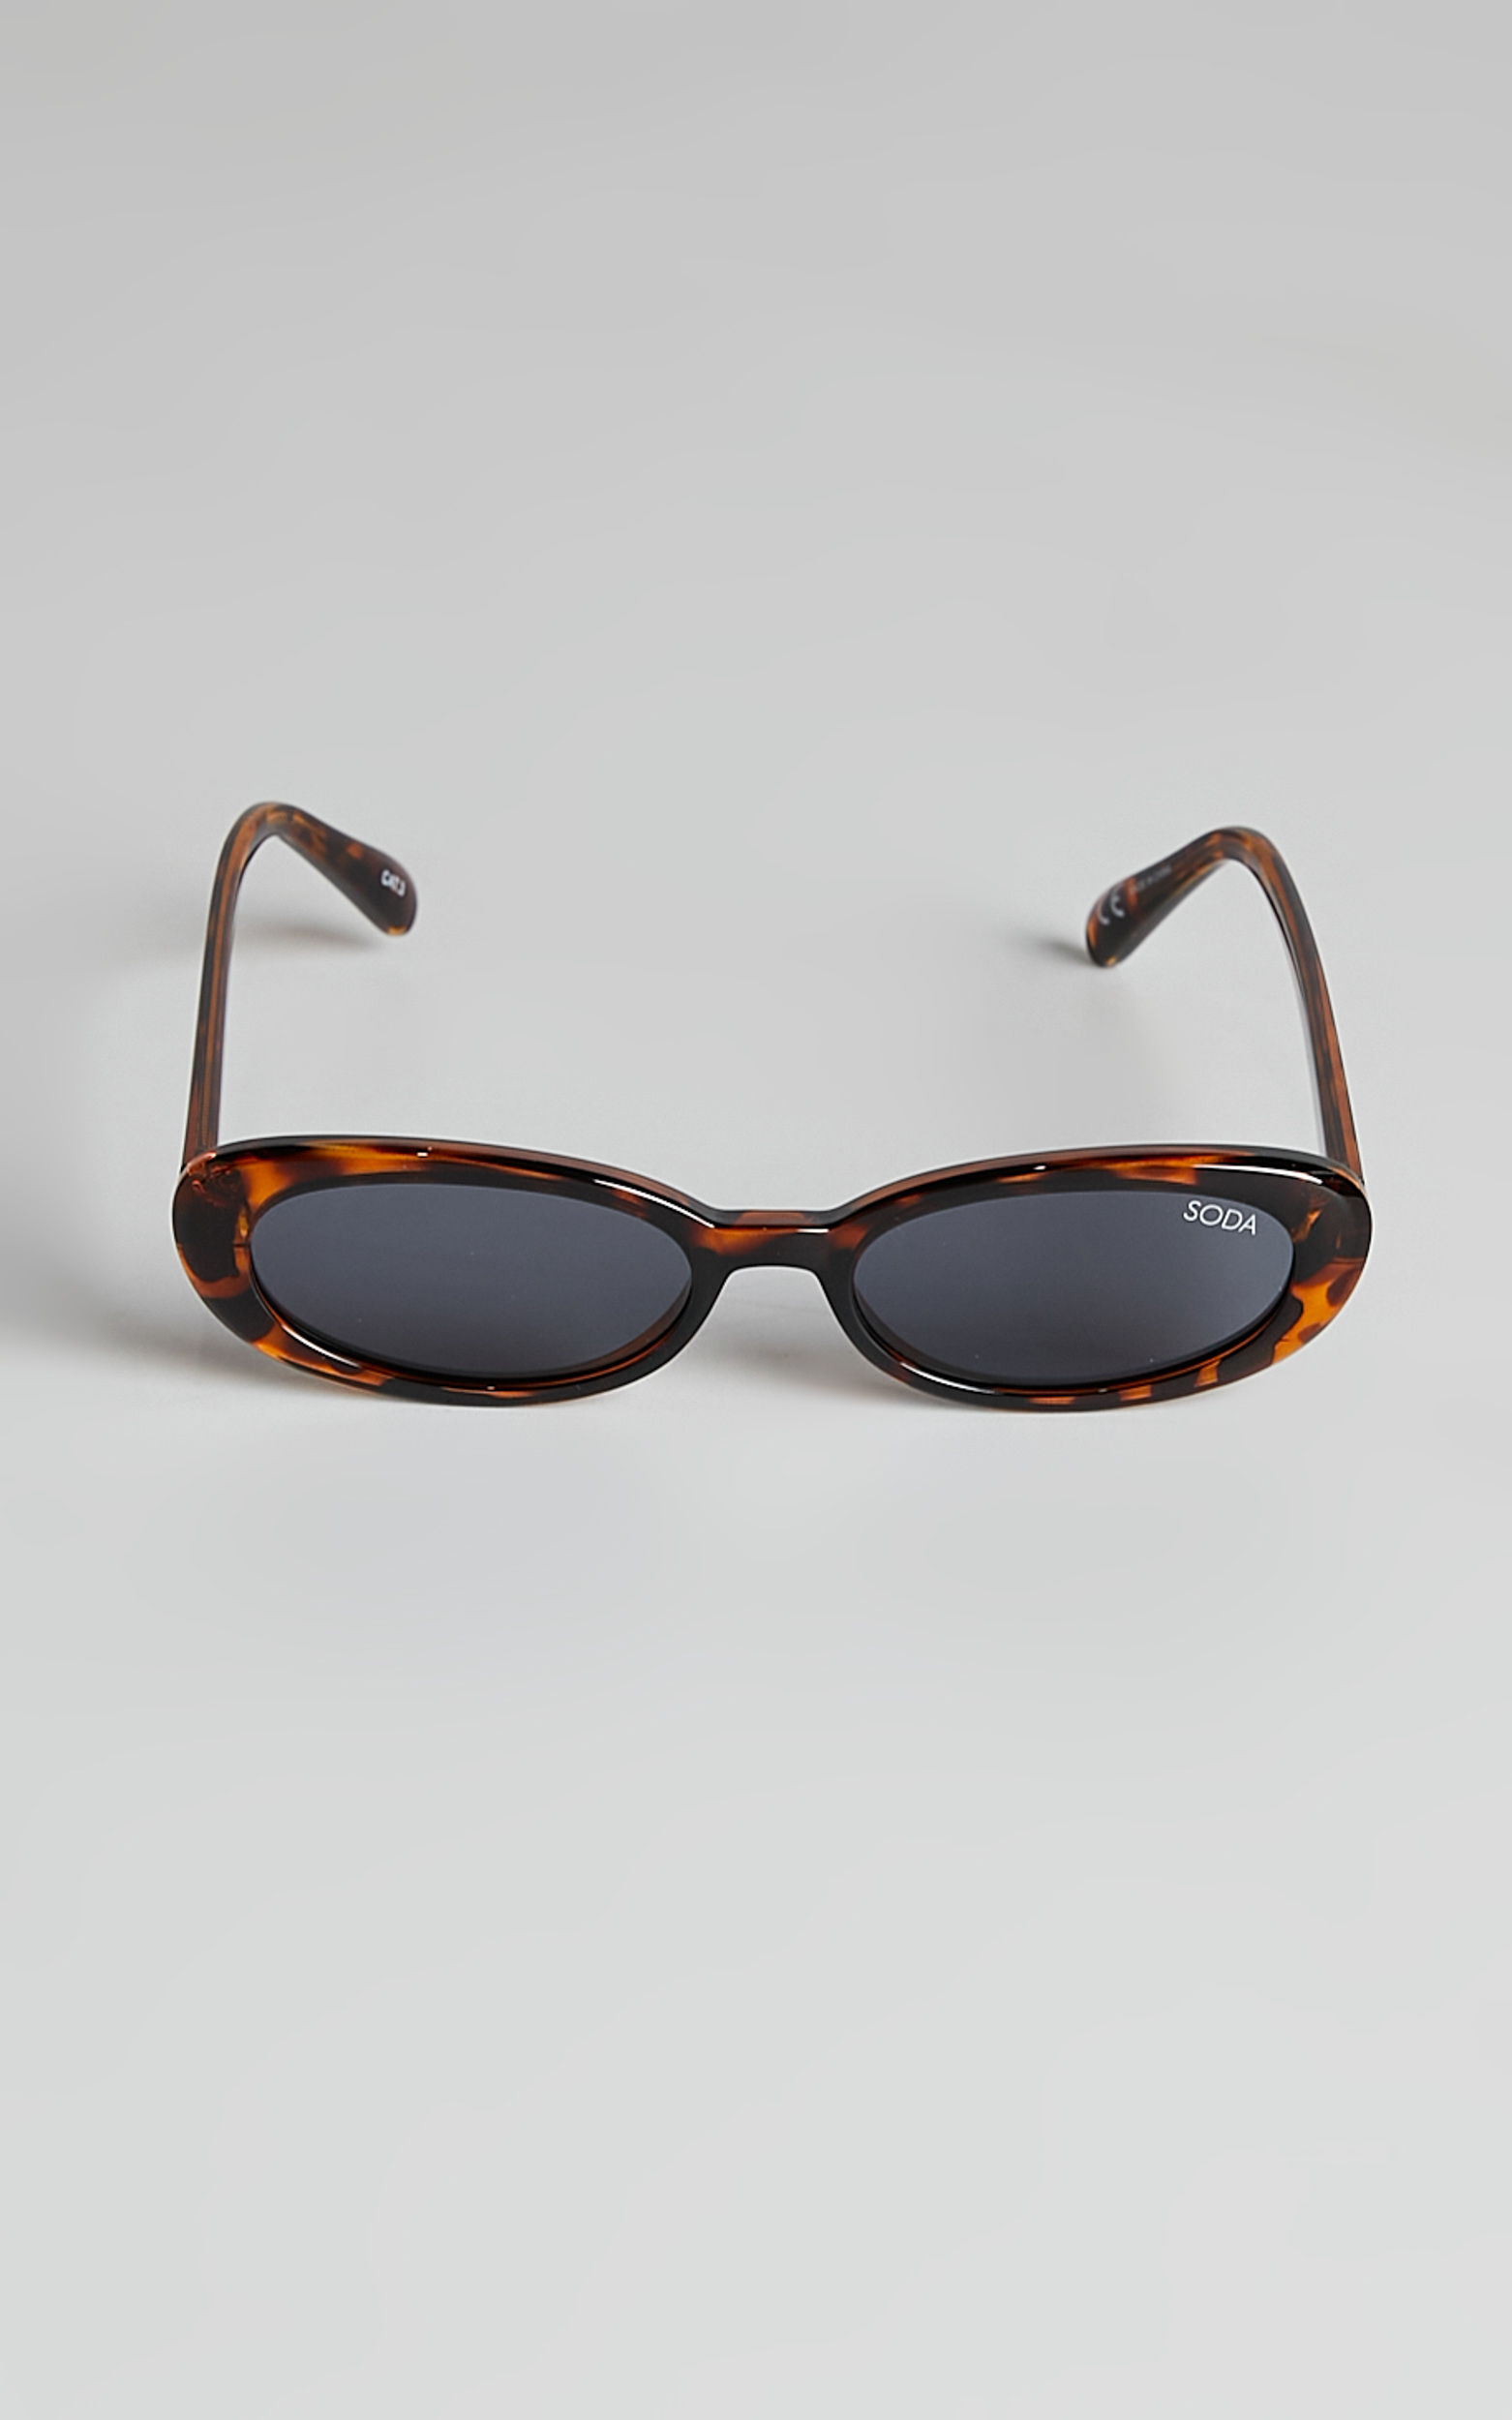 Soda Shades - GG Sunglasses in Tortoiseshell - NoSize, NEU2, hi-res image number null